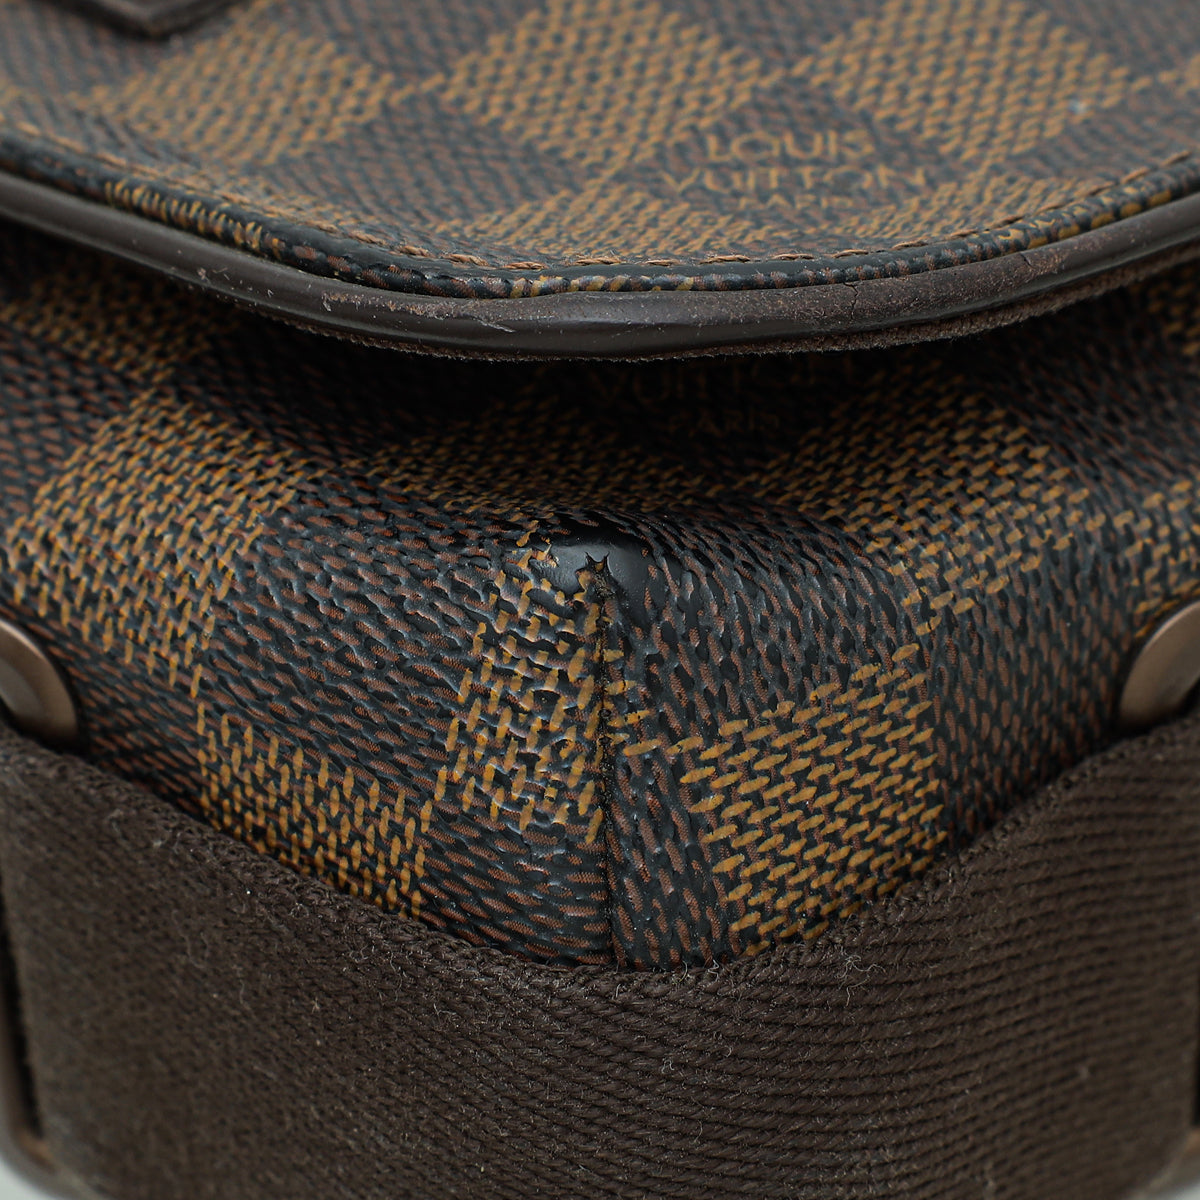 Louis Vuitton Damier Brooklyn Pm Messenger Baggage